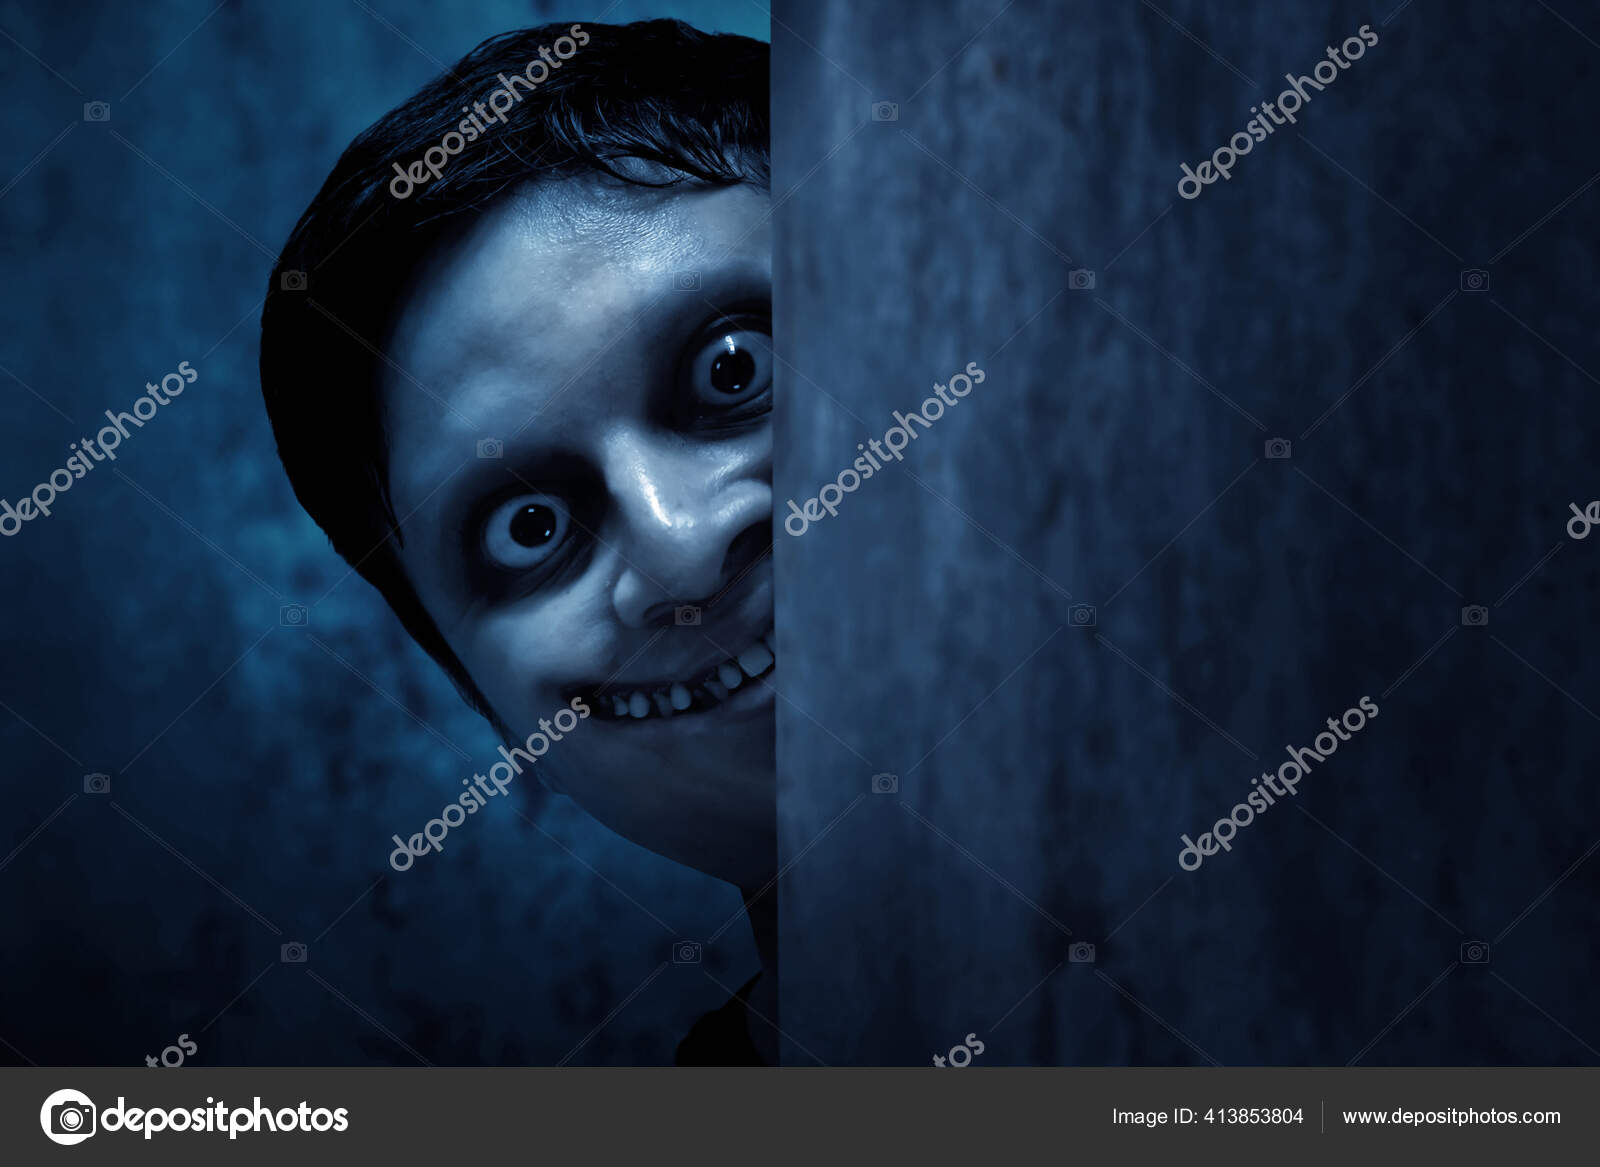 Cara Fantasma Assustador Tema Halloween — Fotografias de Stock